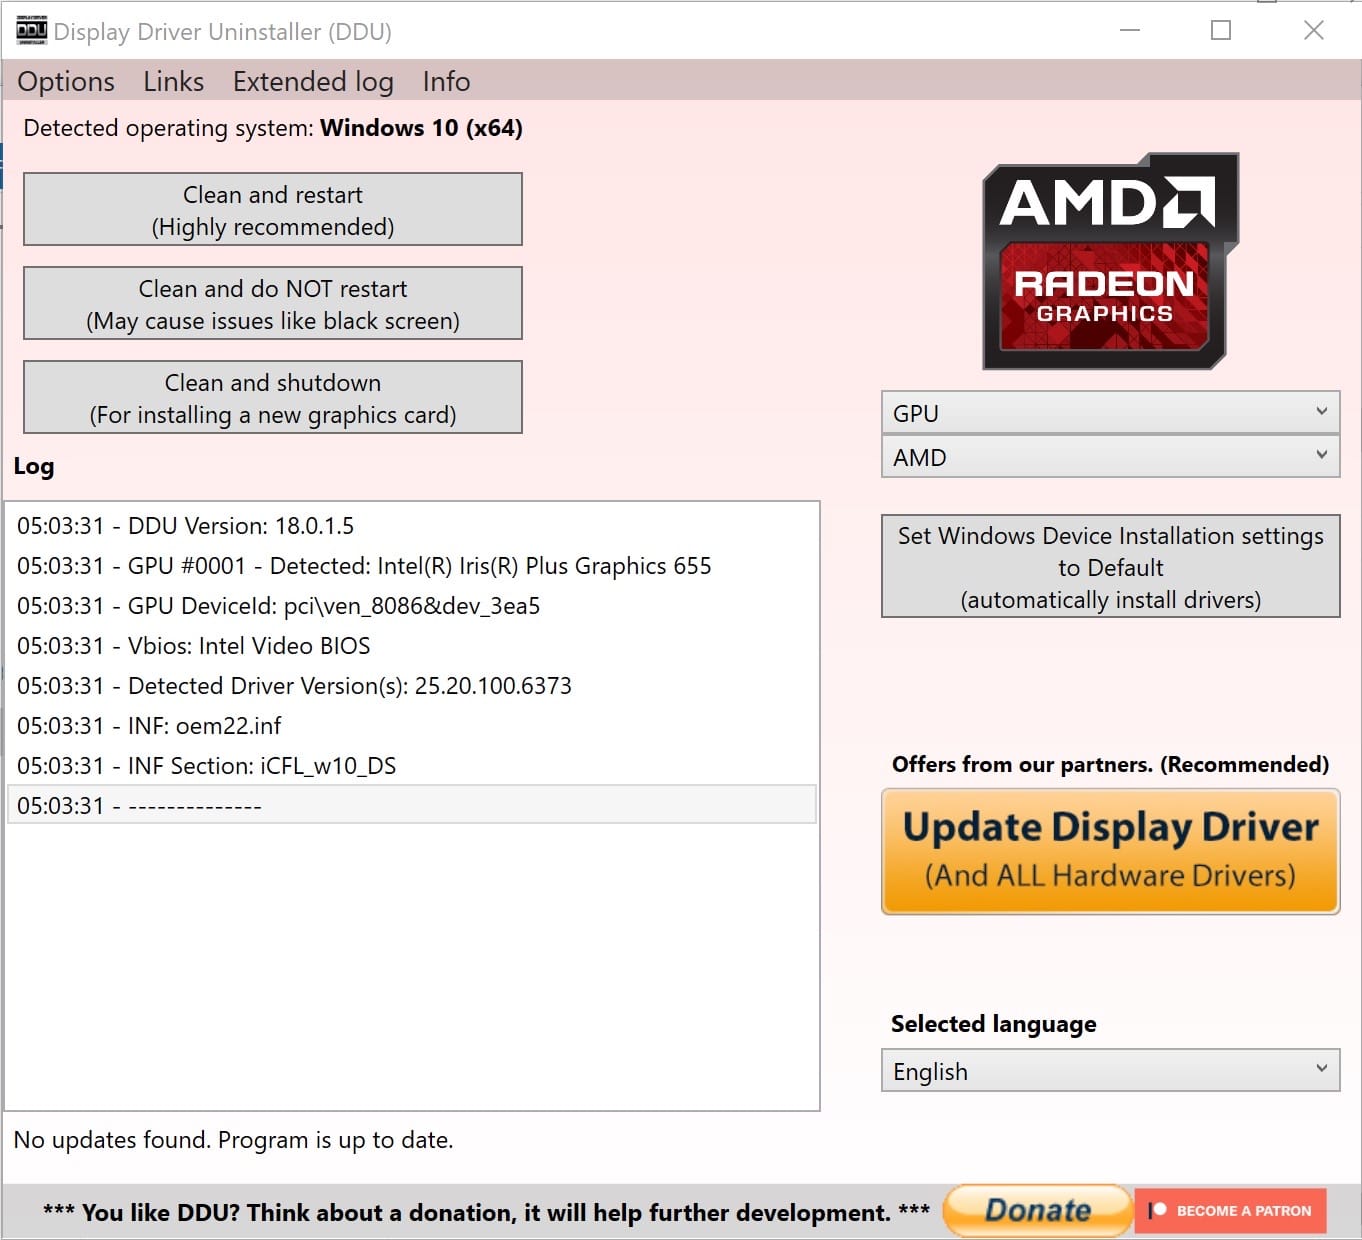 The DDU UI after selecting AMD Radeon